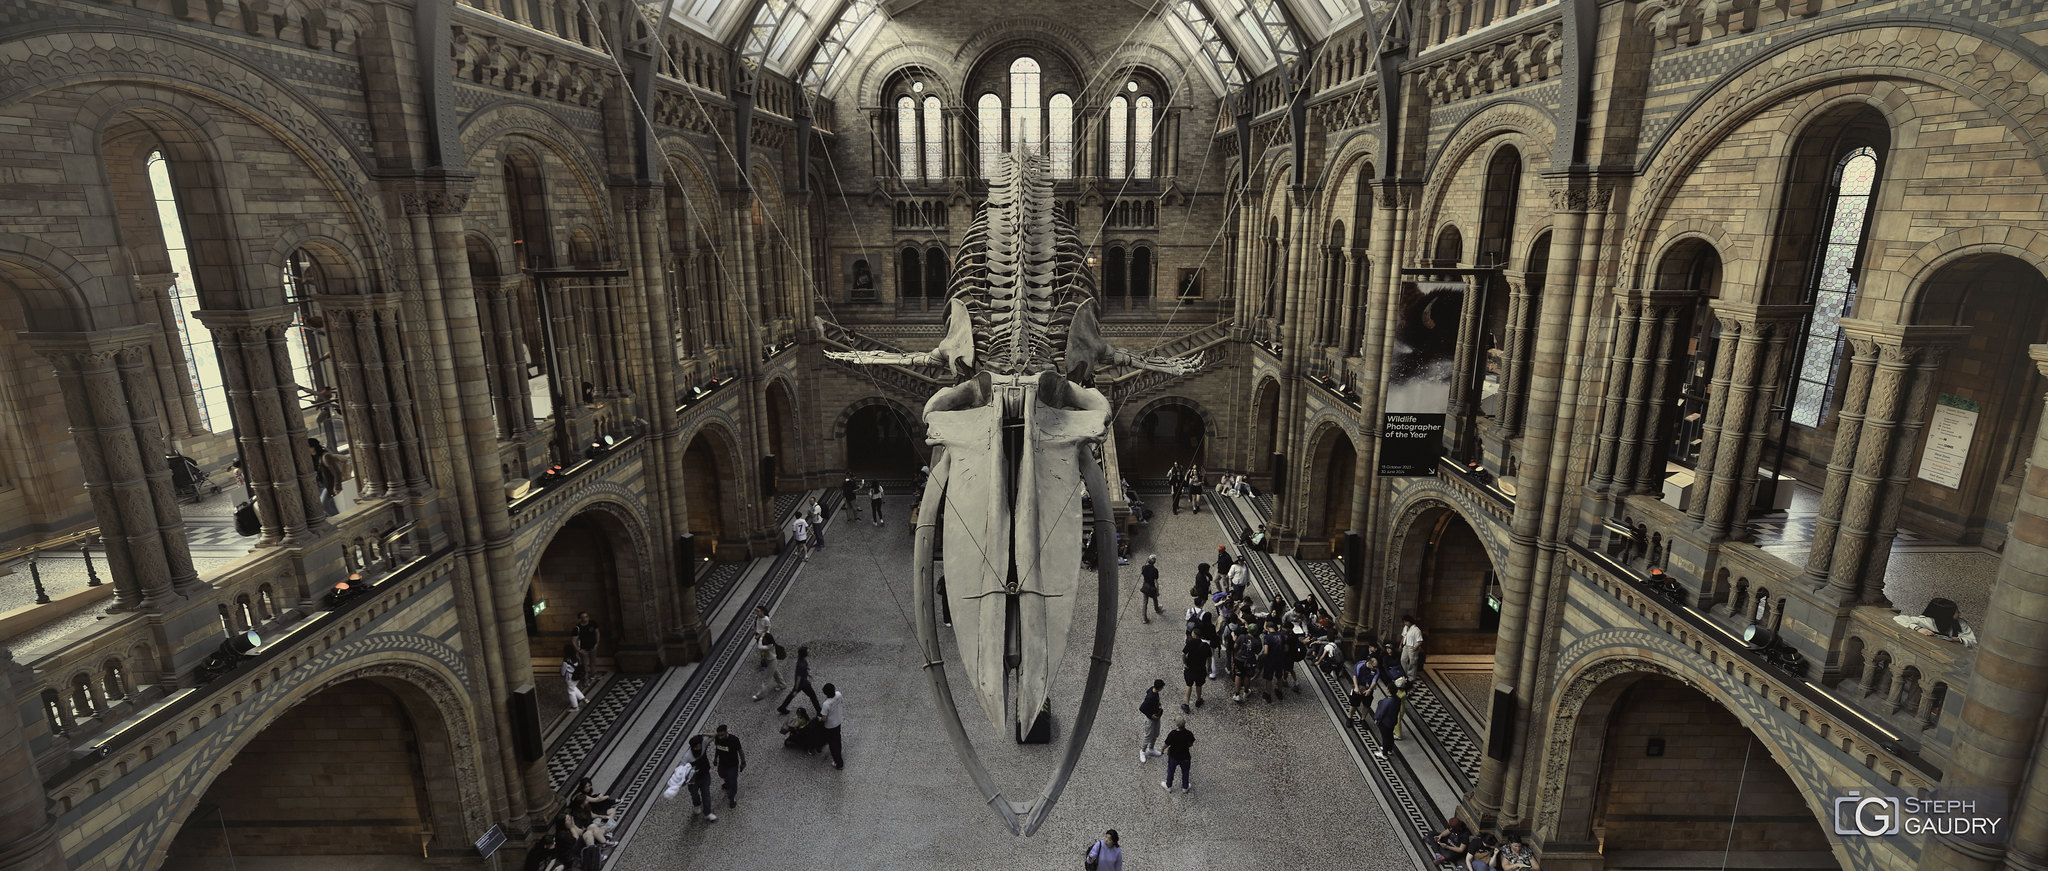 Hope - the skeleton of a blue whale [Klik om de diavoorstelling te starten]